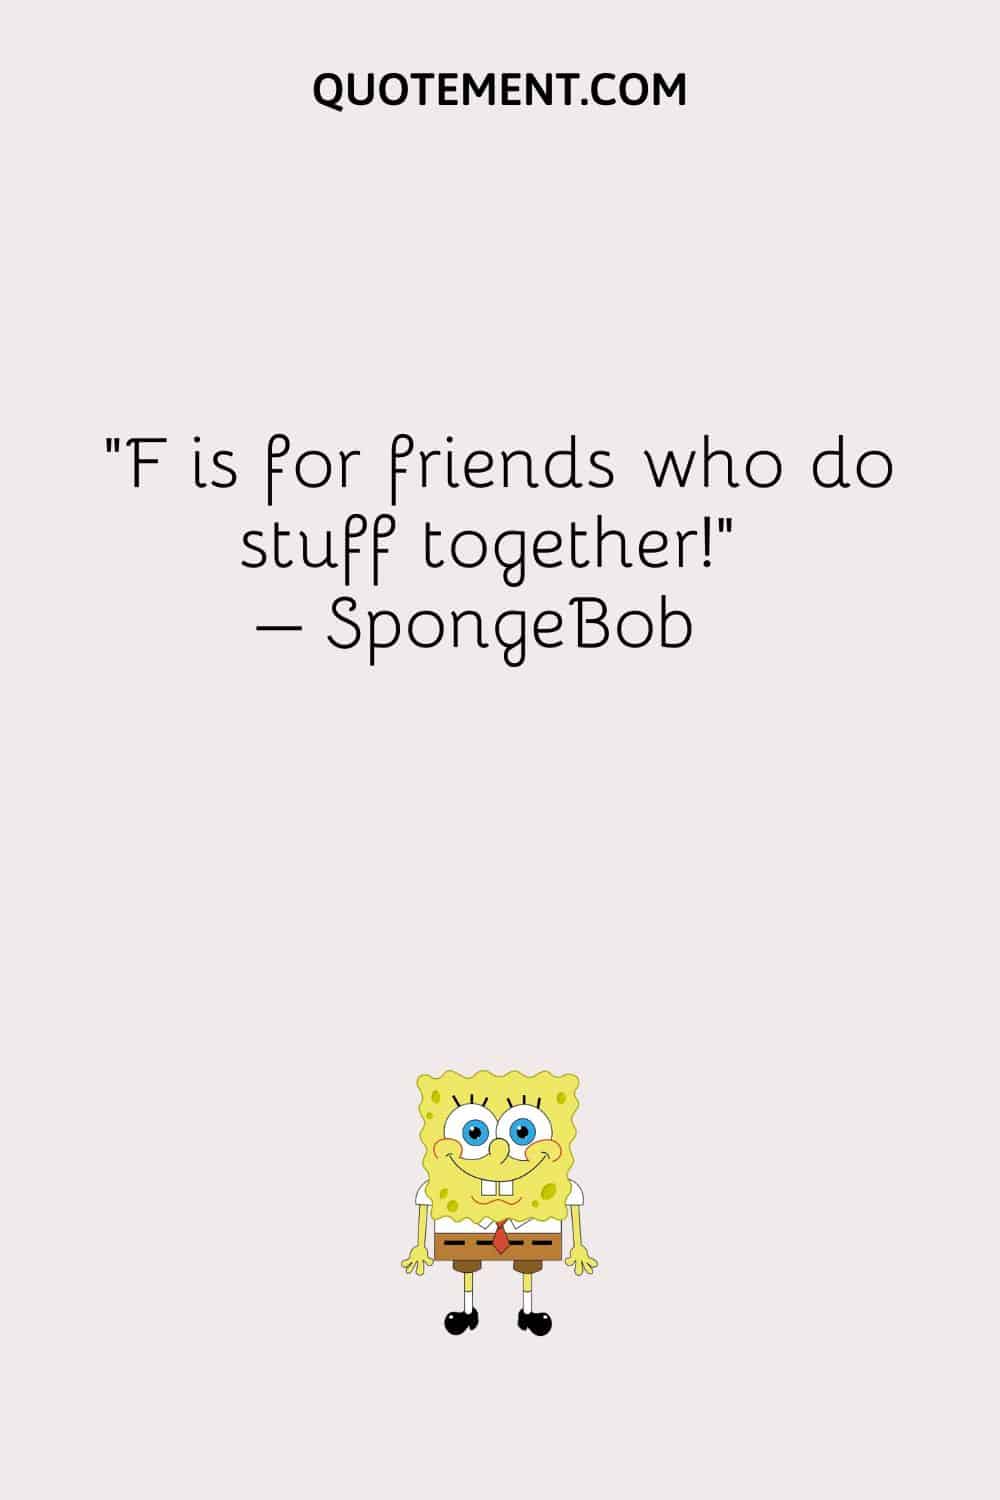 Illustration representing a cool SpongeBob SquarePants quote.